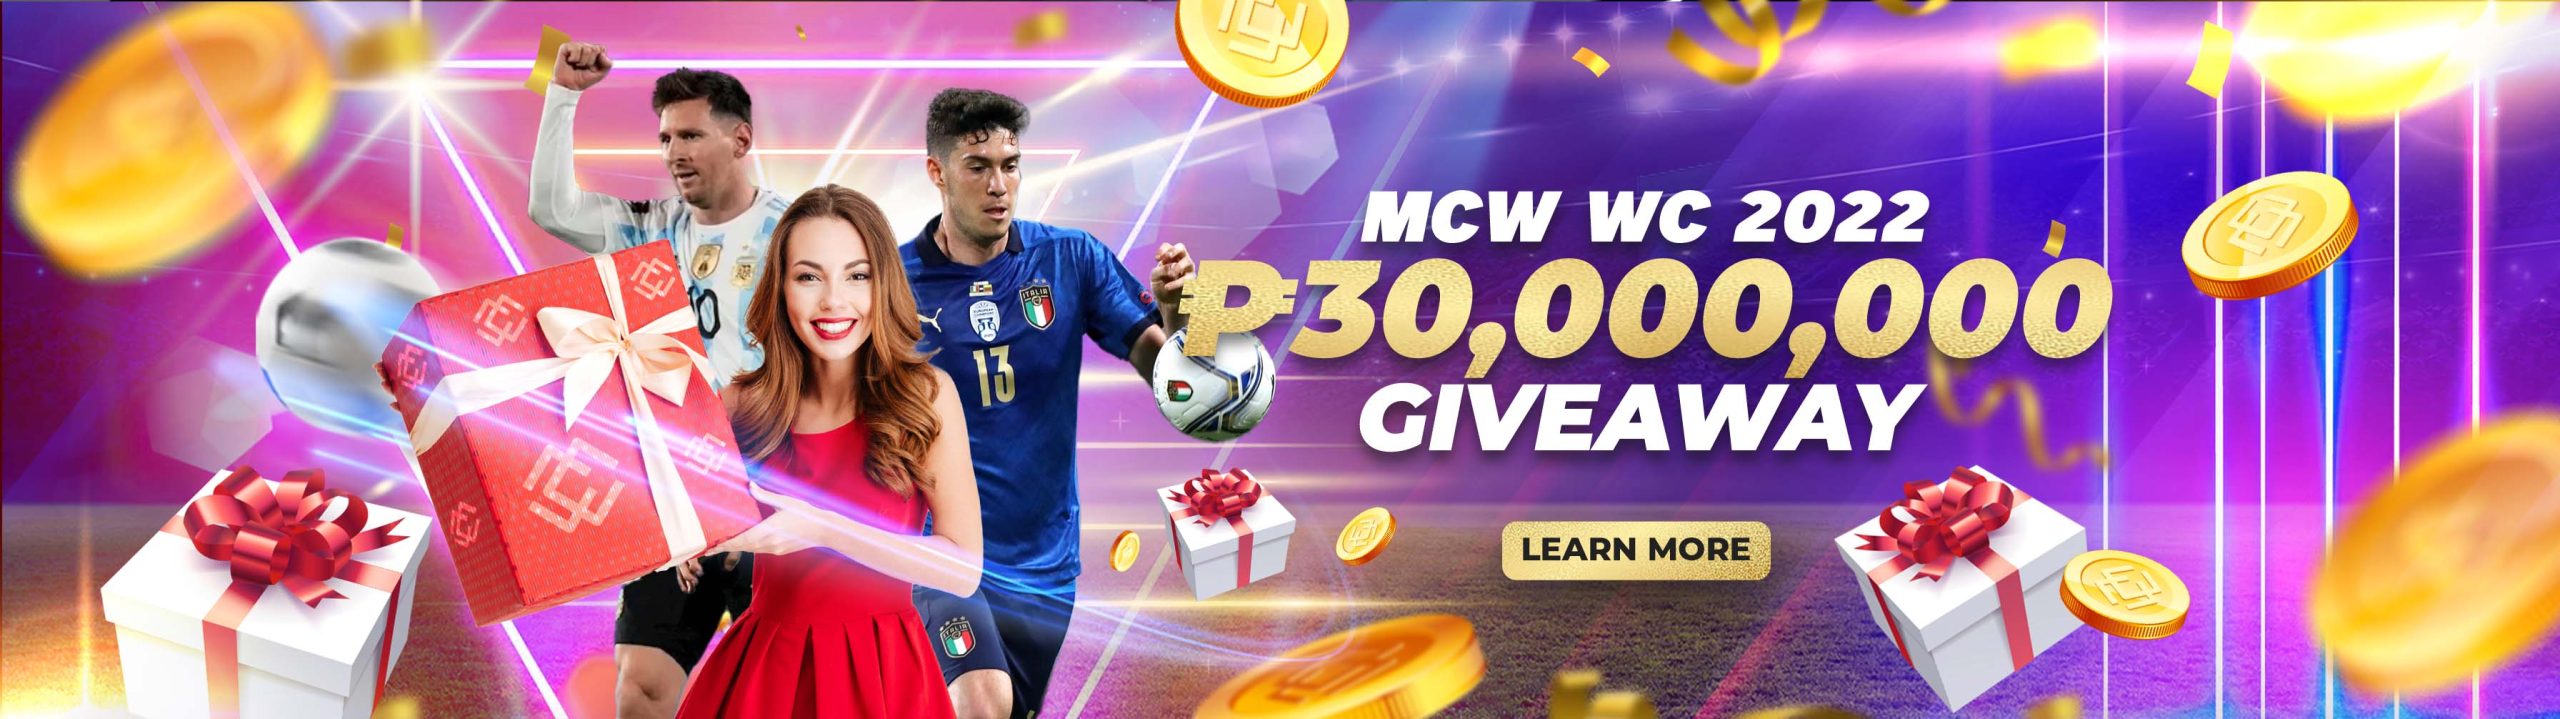 MCWPHP_EN_FIFA WC Giveaway_HOMEPAGE (Desktop)